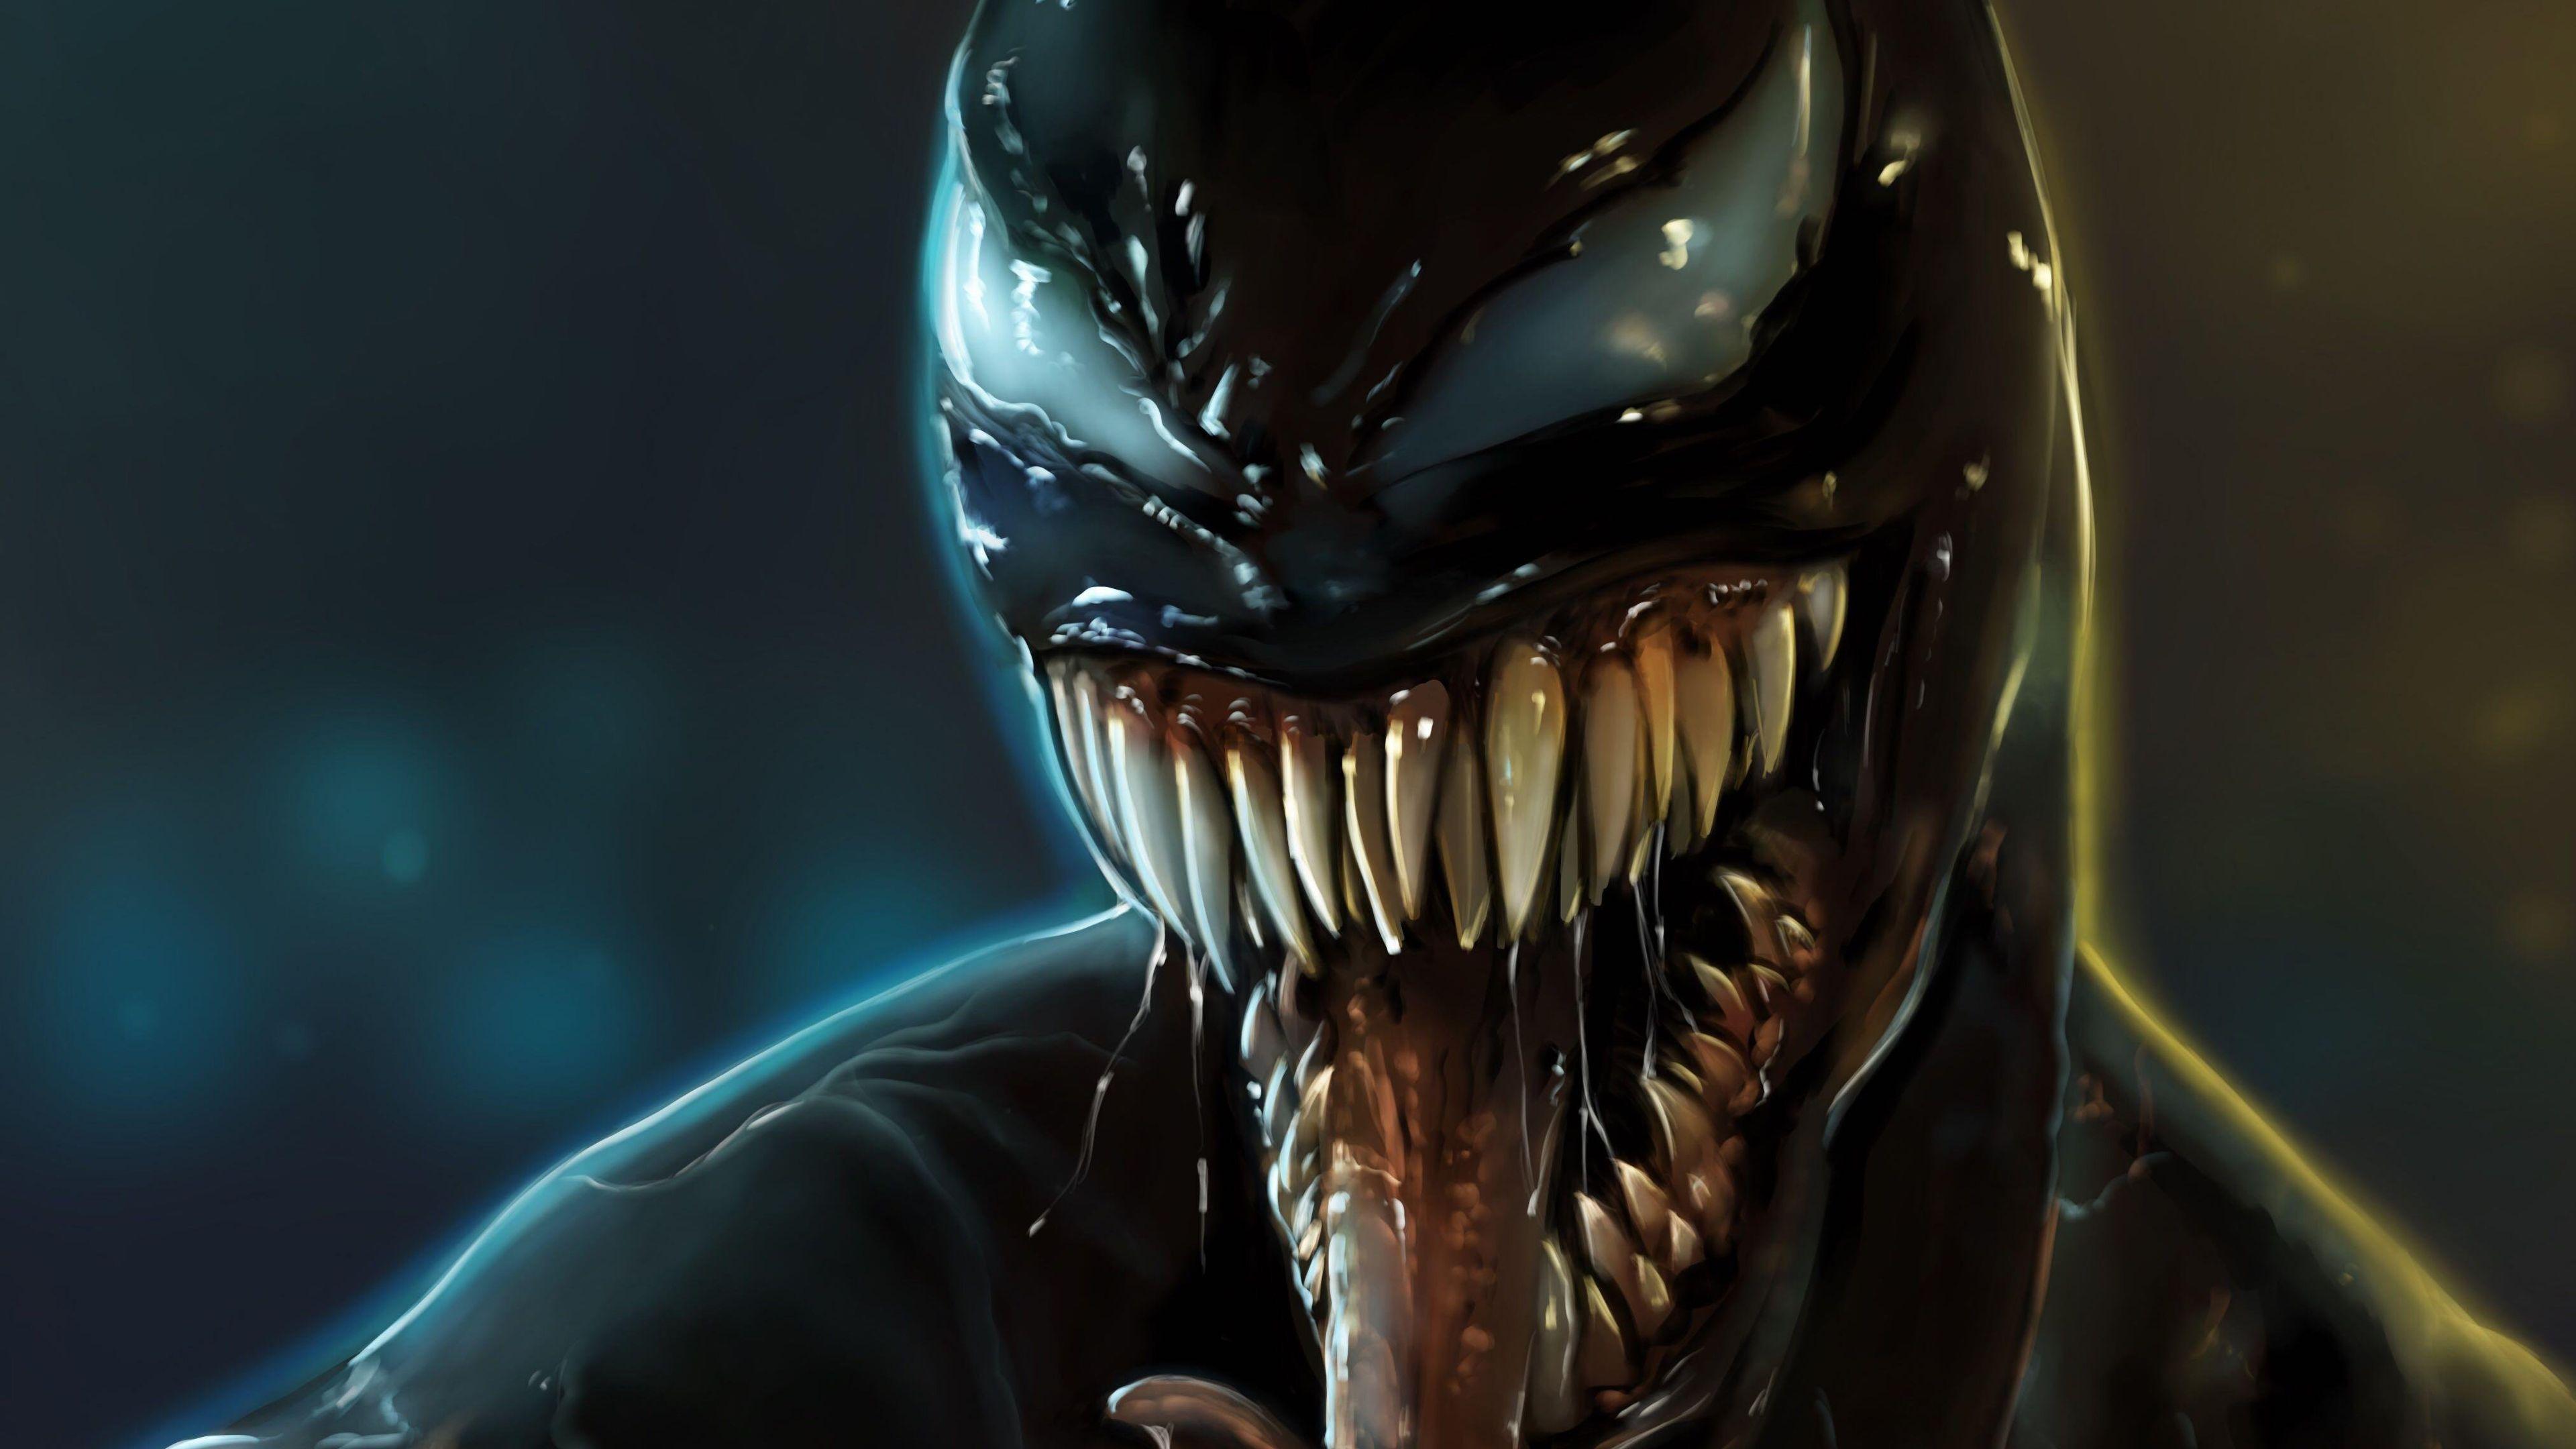 Venom for ios download free